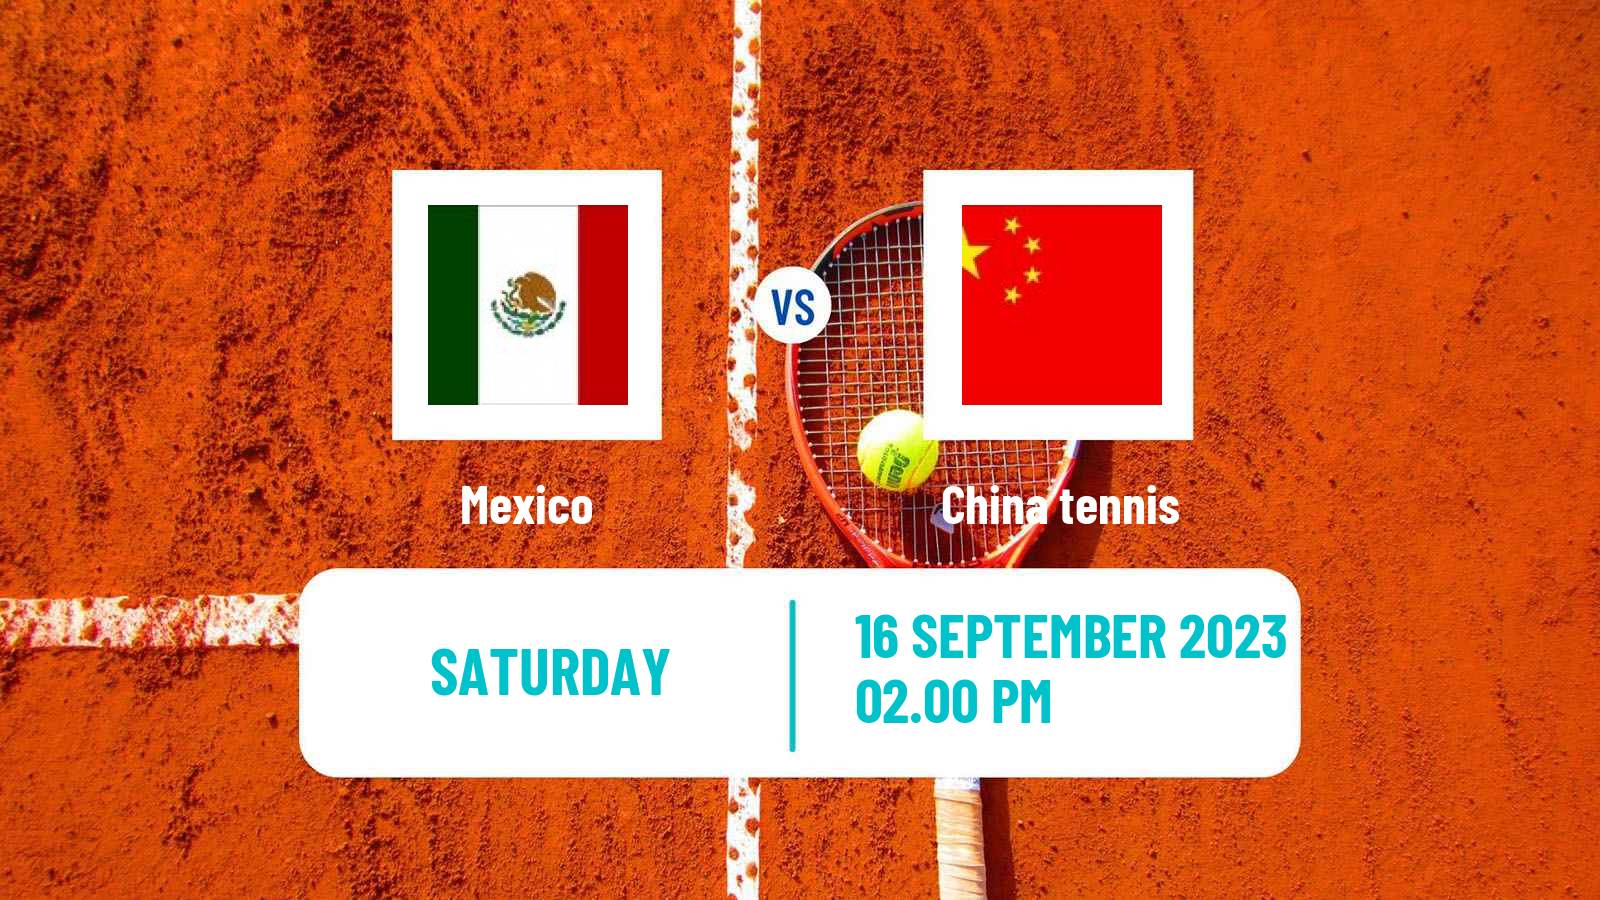 Tennis Davis Cup World Group II Teams Mexico - China